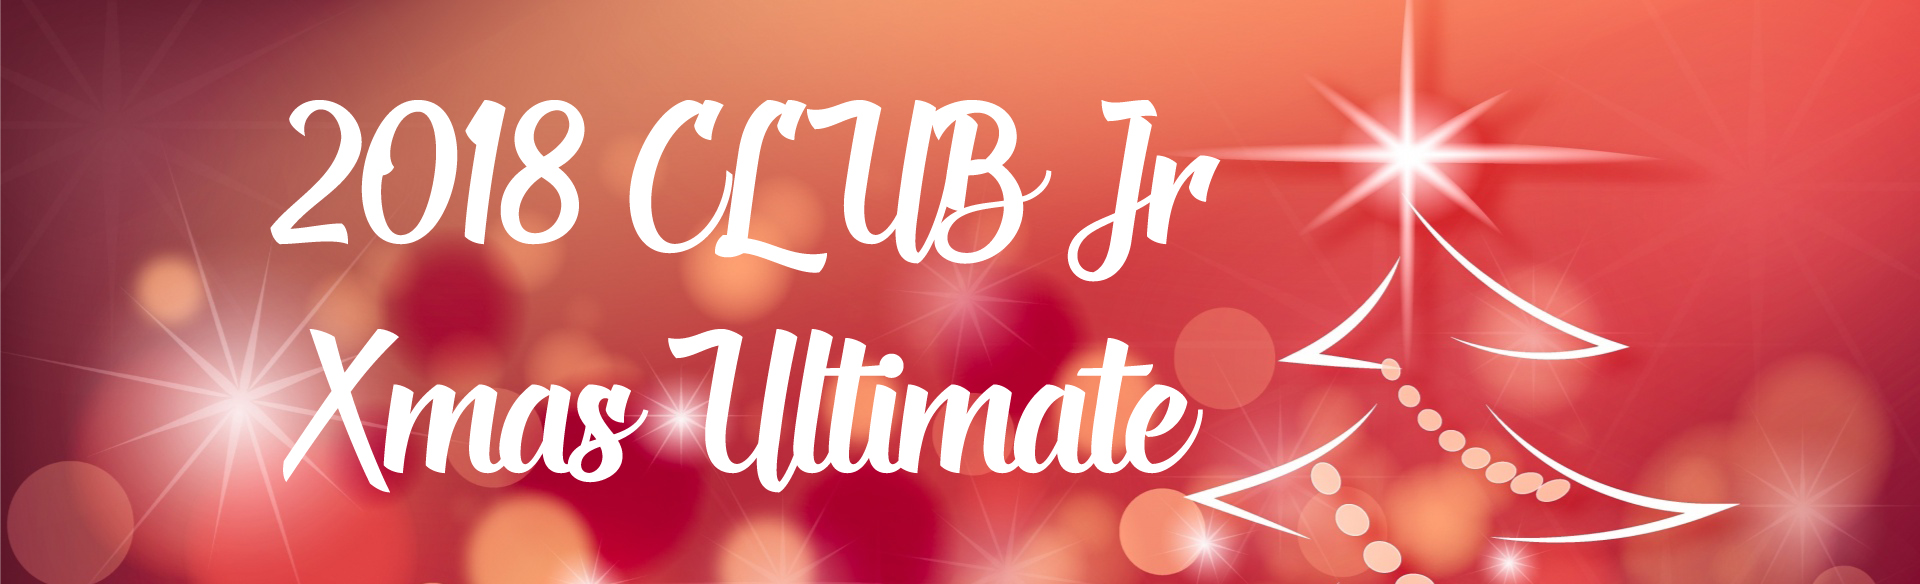 2018 CLUB Jr Xmas Ultimate